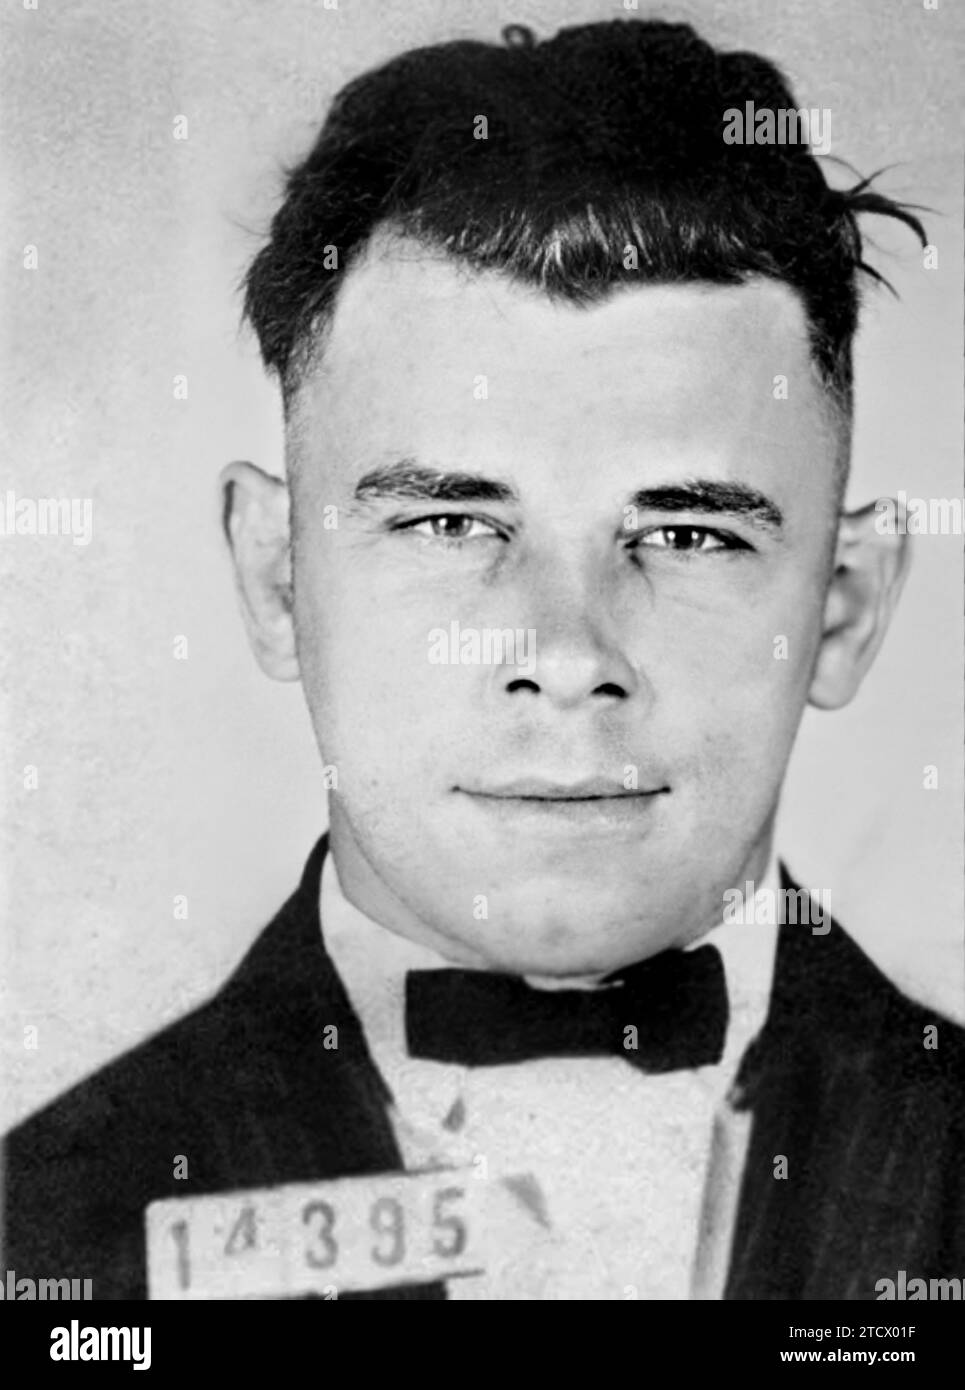 1926 ca , USA : The american gangster JOHN Herbert DILLINGER ( 1902 - 1934 ) mugshot , killed by FBI during a fire fighting .  - HISTORY - FOTO STORICHE - MUG SHOT - MUG-SHOT - FOTO SEGNALETICA - CRIMINE - CRIMINALE - CRIME - ASSASSINO - CRIMINAL - KILLER - Gangstern - portrait - cravatta - tie bow - papillon  - rapinatore di banche - RICERCATO - BANDITO - GANGSTERN - proibizionismo ---  Archivio GBB Stock Photo